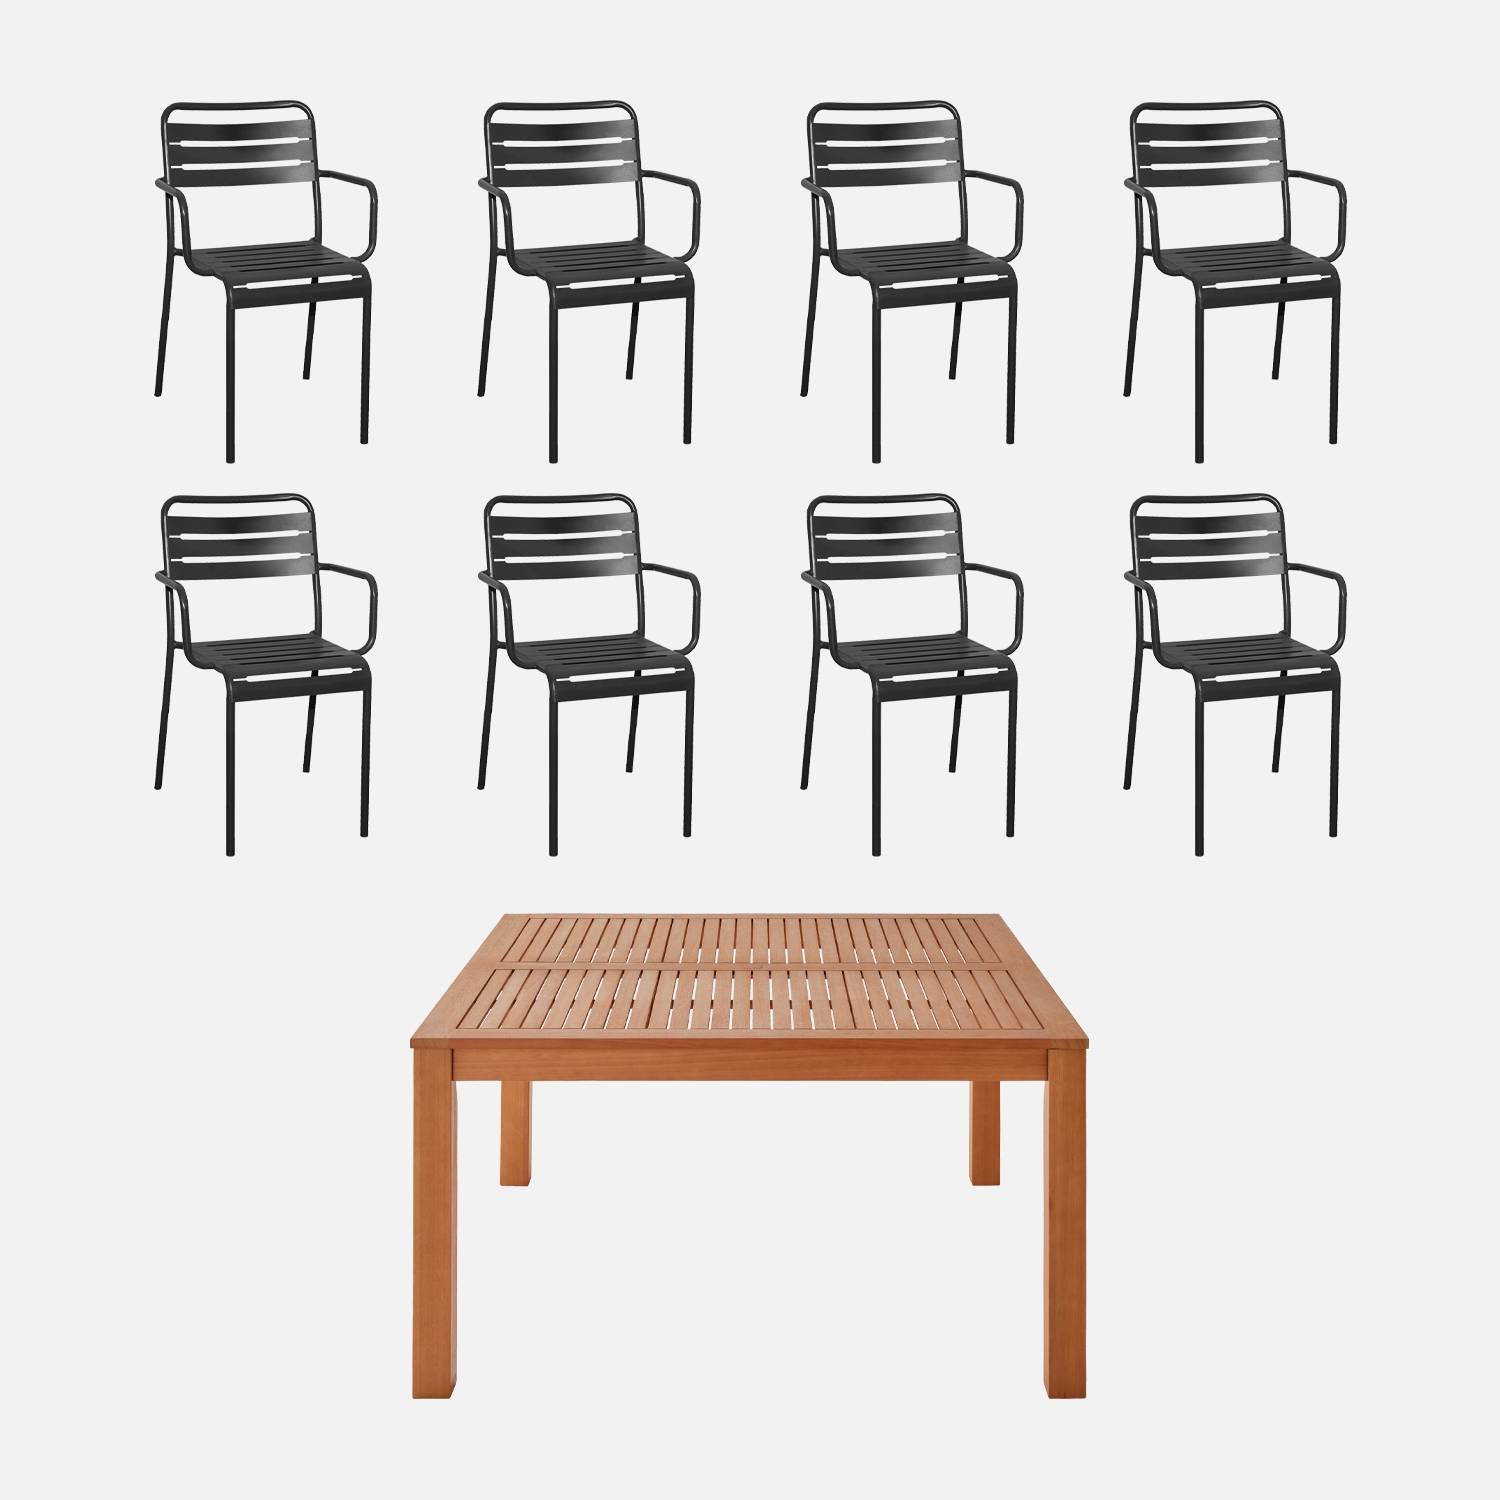 Table de jardin bois FSC+ 8 fauteuils anthracite I sweeek